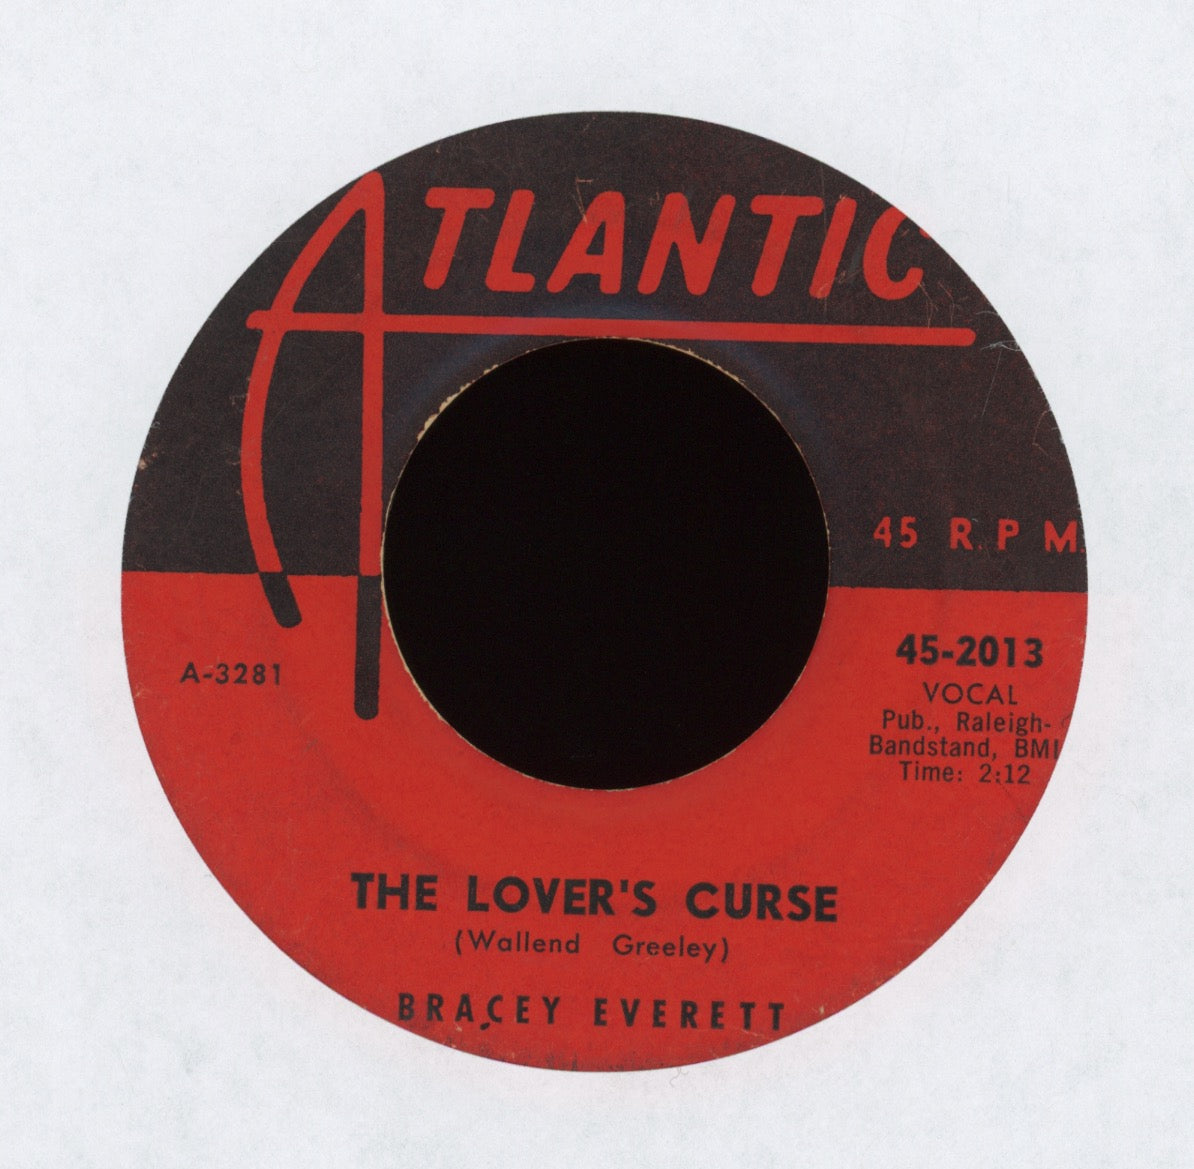 Bracey Everett - The Lover's Curse on Atlantic Rockabilly 45